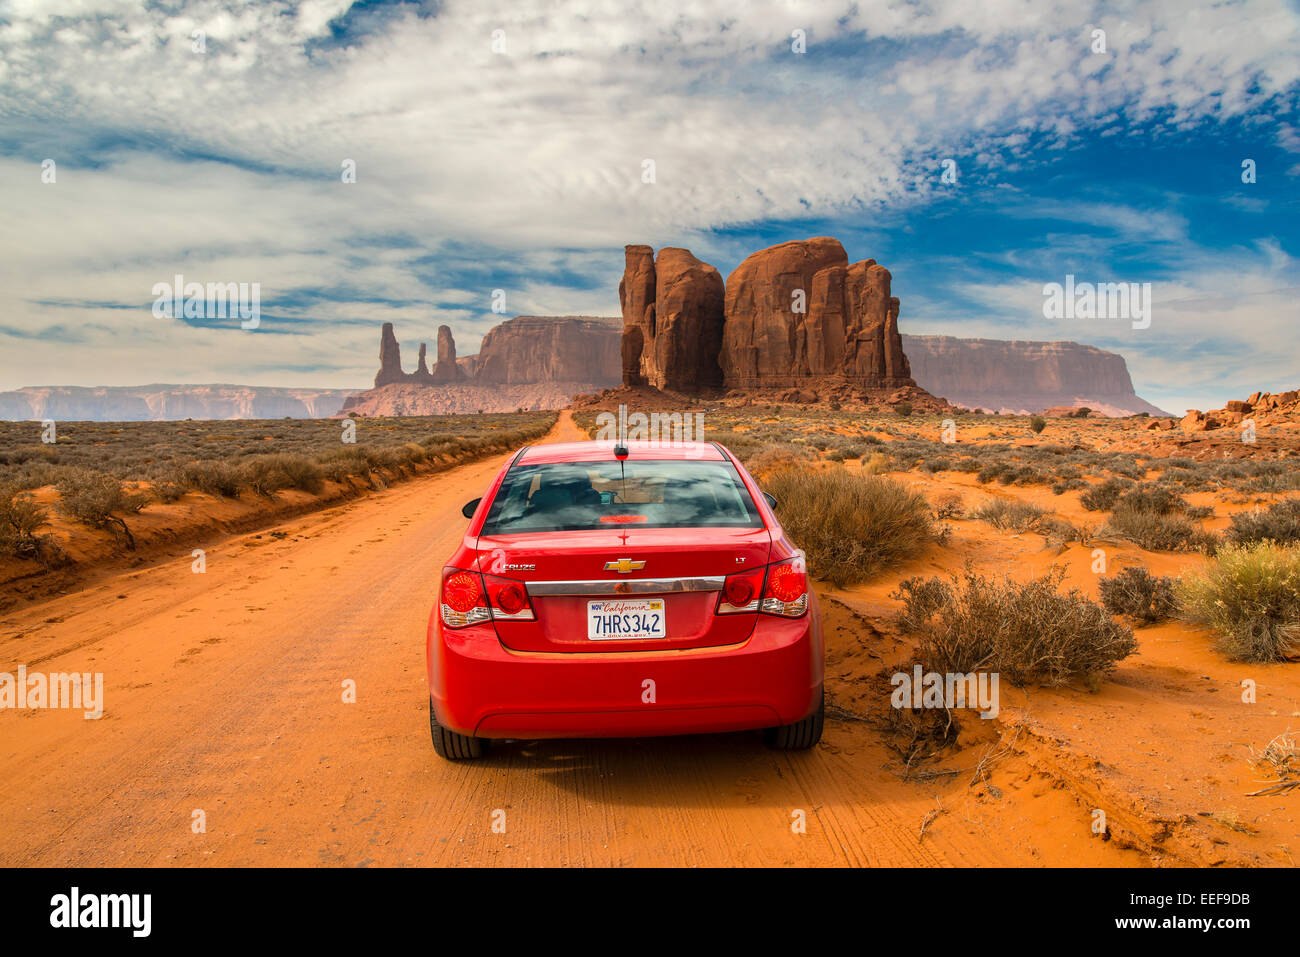 Auto auf einem Schotterweg, Monument Valley Navajo Tribal Park, Arizona, USA Stockfoto